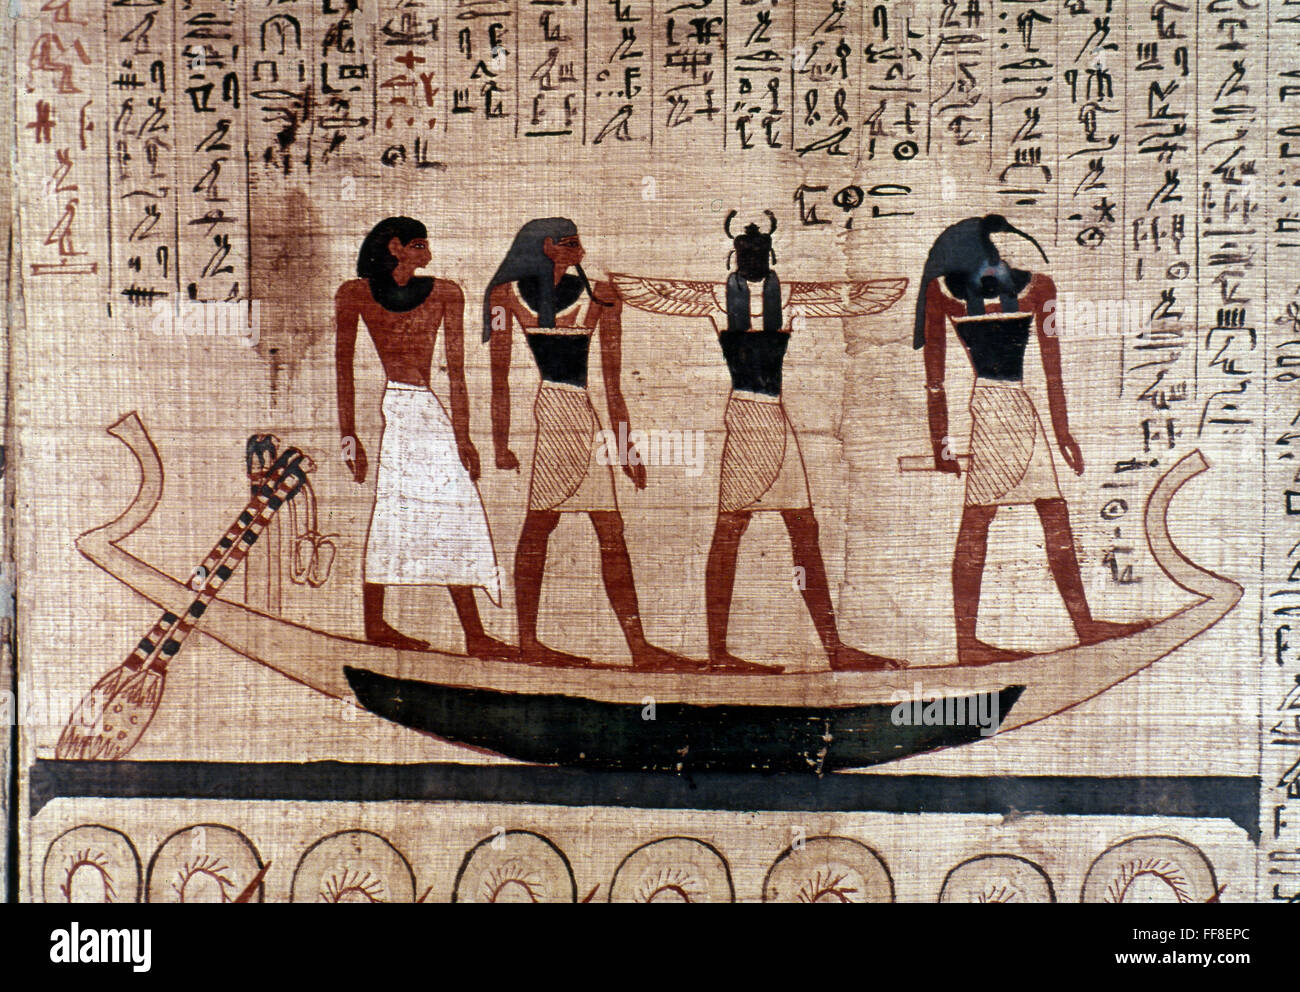 Barcaza de KHEPERA. /Nel barcaza de Khepera (Kepri), la divinidad solar egipcia. Papiro funerario egipcio, 21ª dinastía. Foto de stock